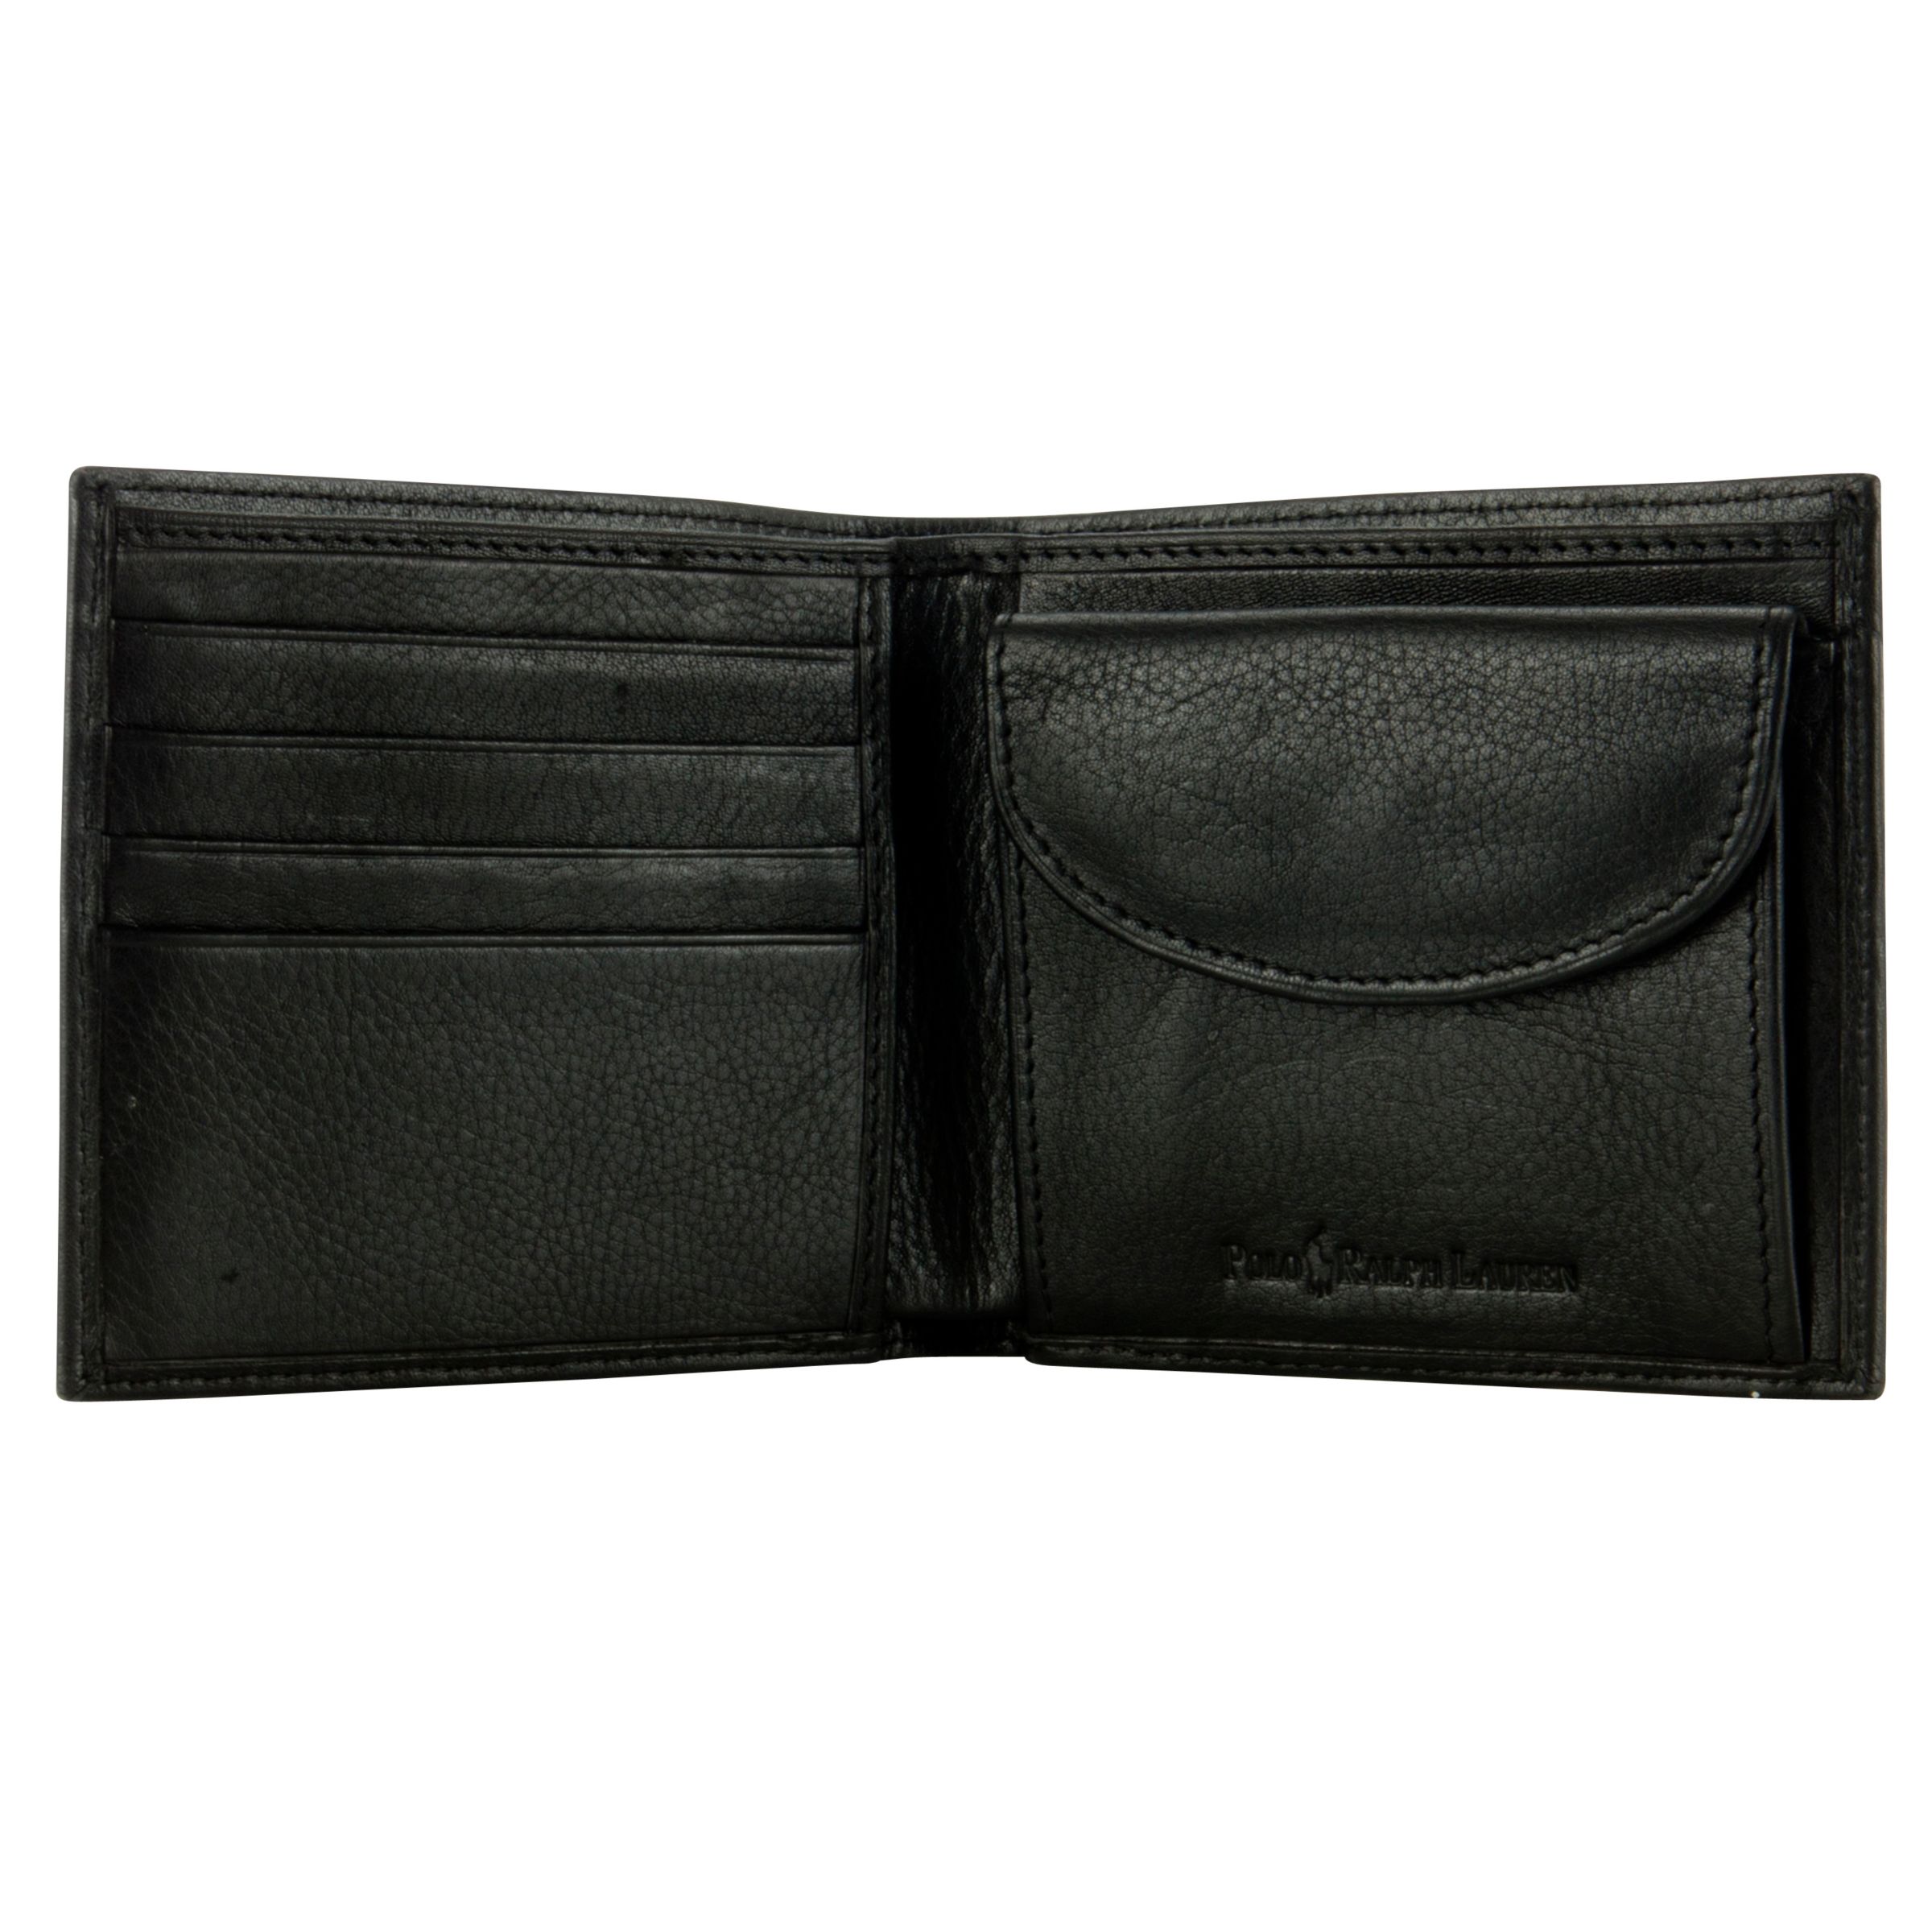 Polo Ralph Lauren Pebble Leather Wallet, Black at John Lewis & Partners